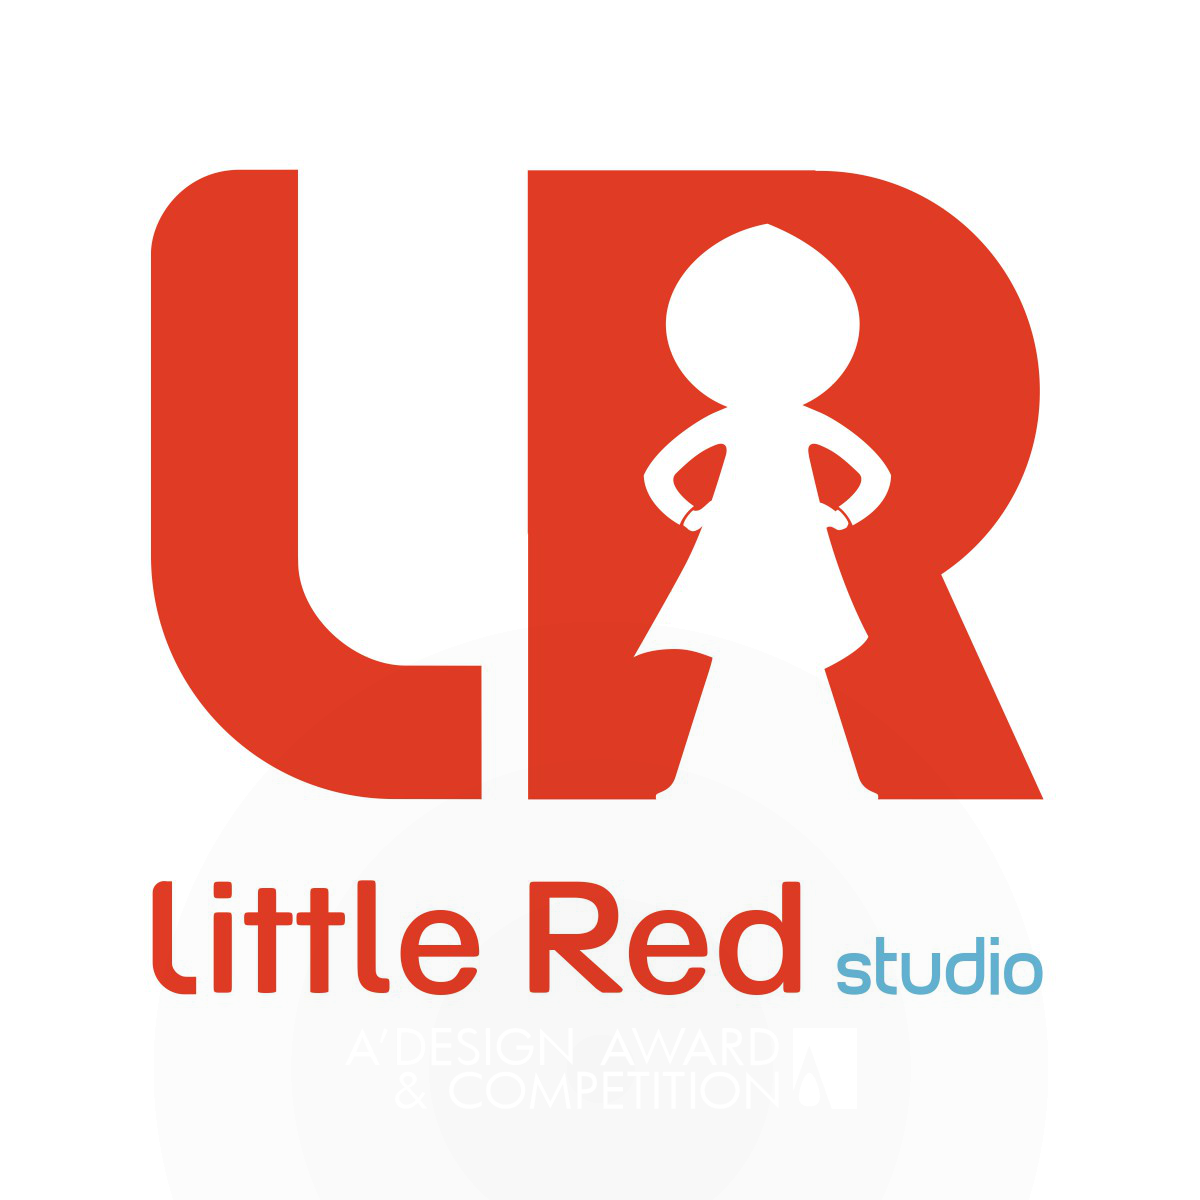 Little Red studio <b>Visual Identity